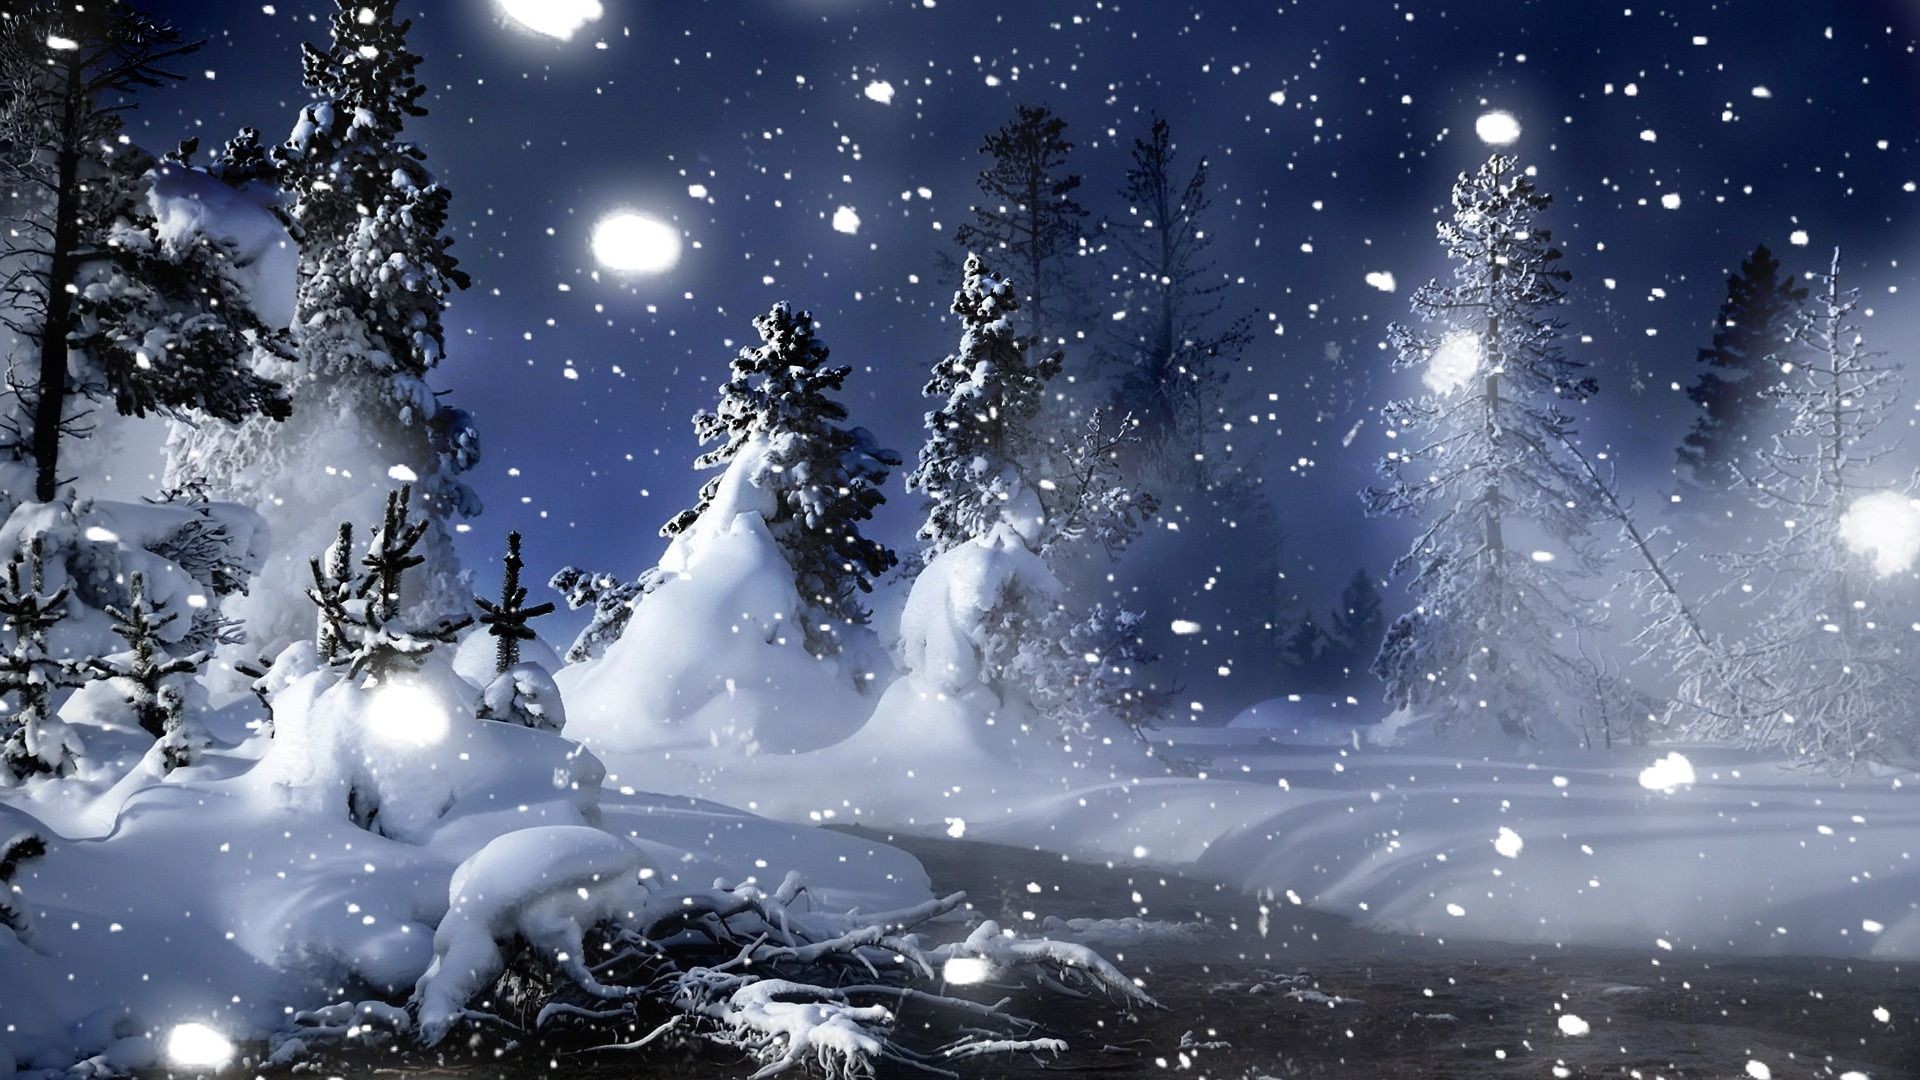 1920x1080 Snowy Winter Night Scenes Wallpaper | HD Wallpapers | Pinterest | Winter  night, Hd wallpaper and Wallpaper